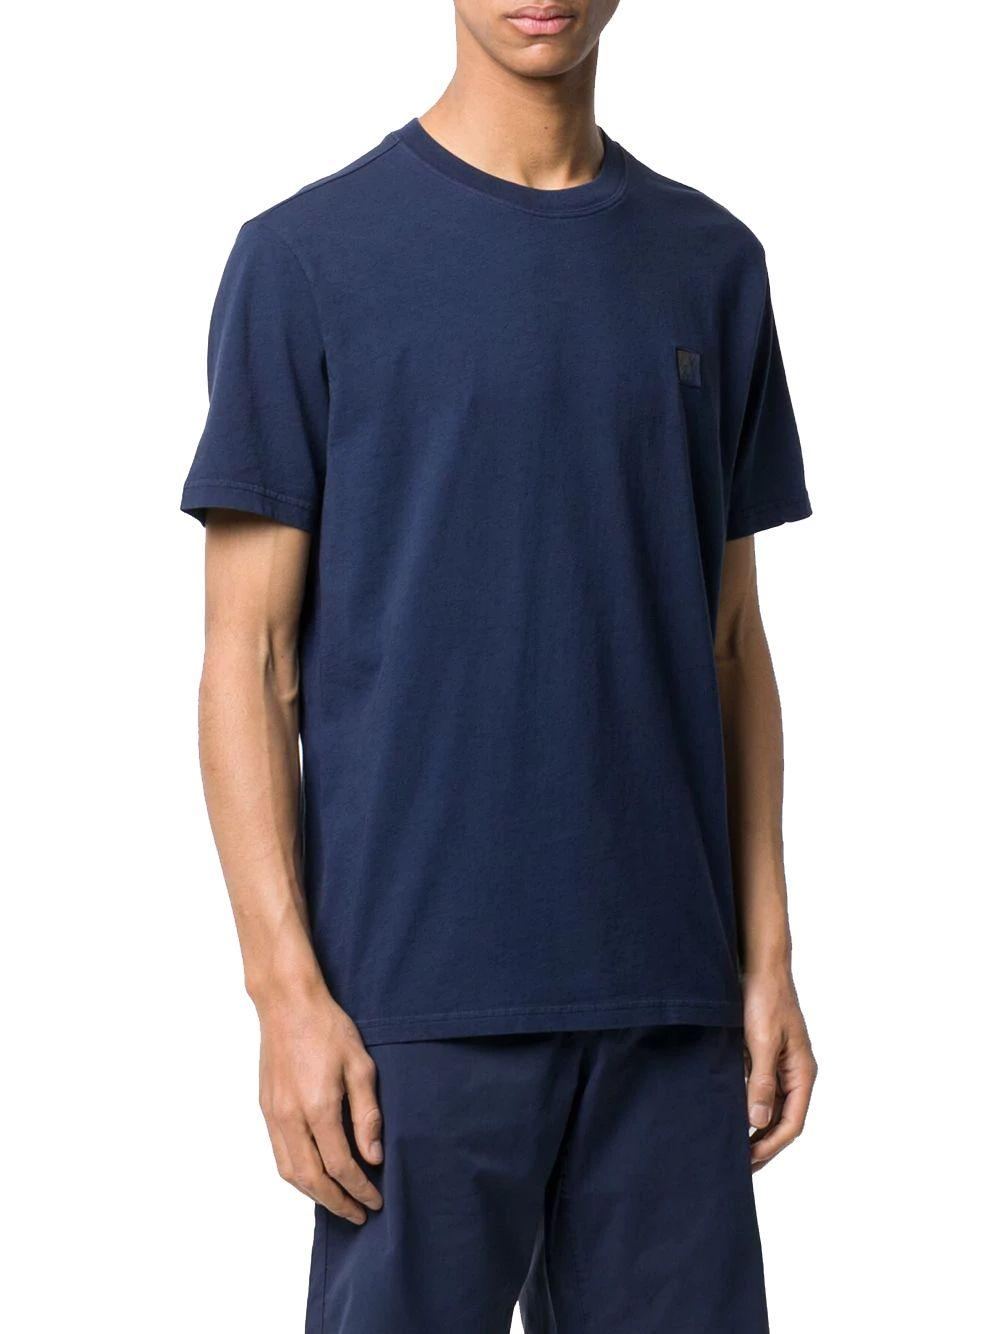 Woolrich Cotton T-shirt in Blue for Men - Lyst